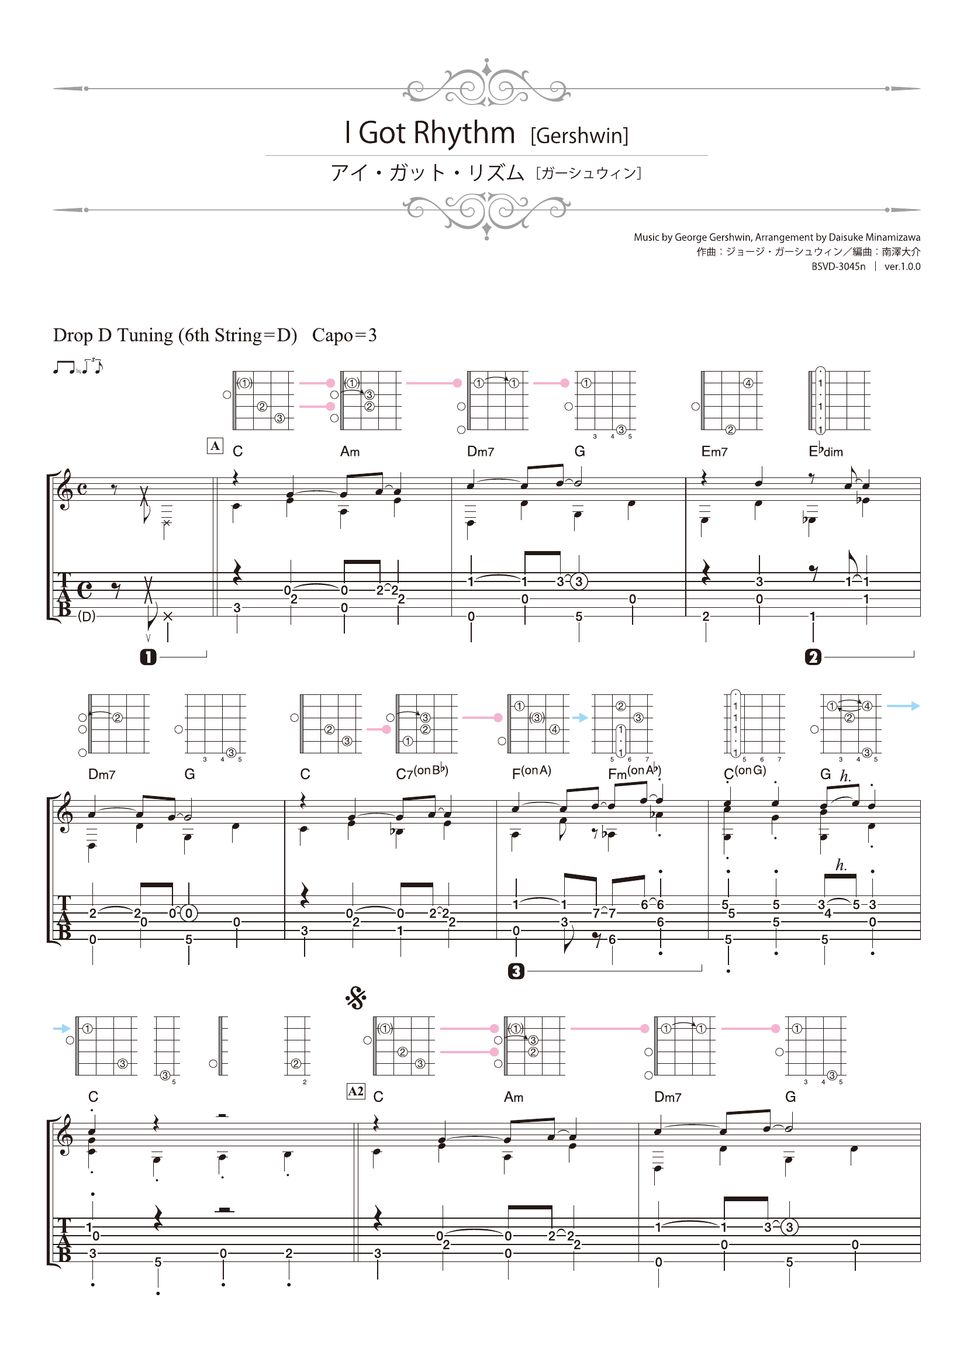 George Gershwin - I Got Rhythm (Solo Guitar) by Daisuke Minamizawa